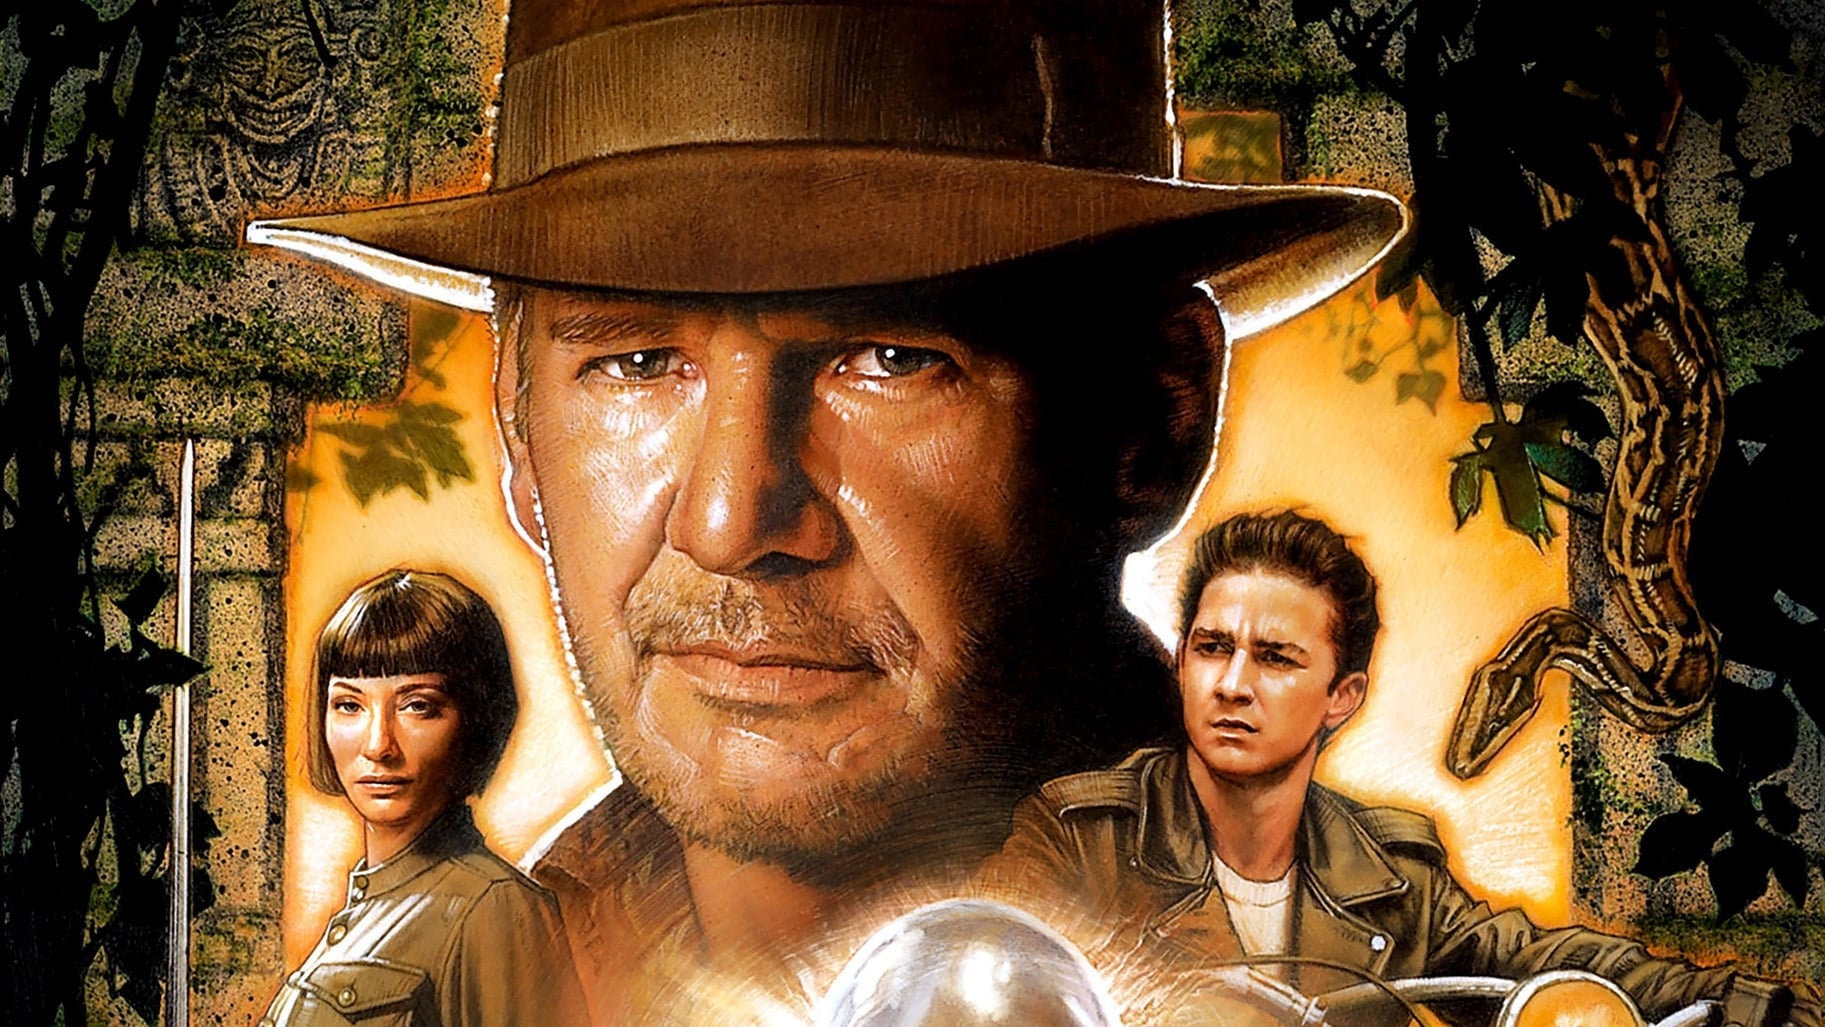 Image du film Indiana Jones et le Royaume du crâne de cristal nylieydpjpkgmjbazw8ydlng89mjpg